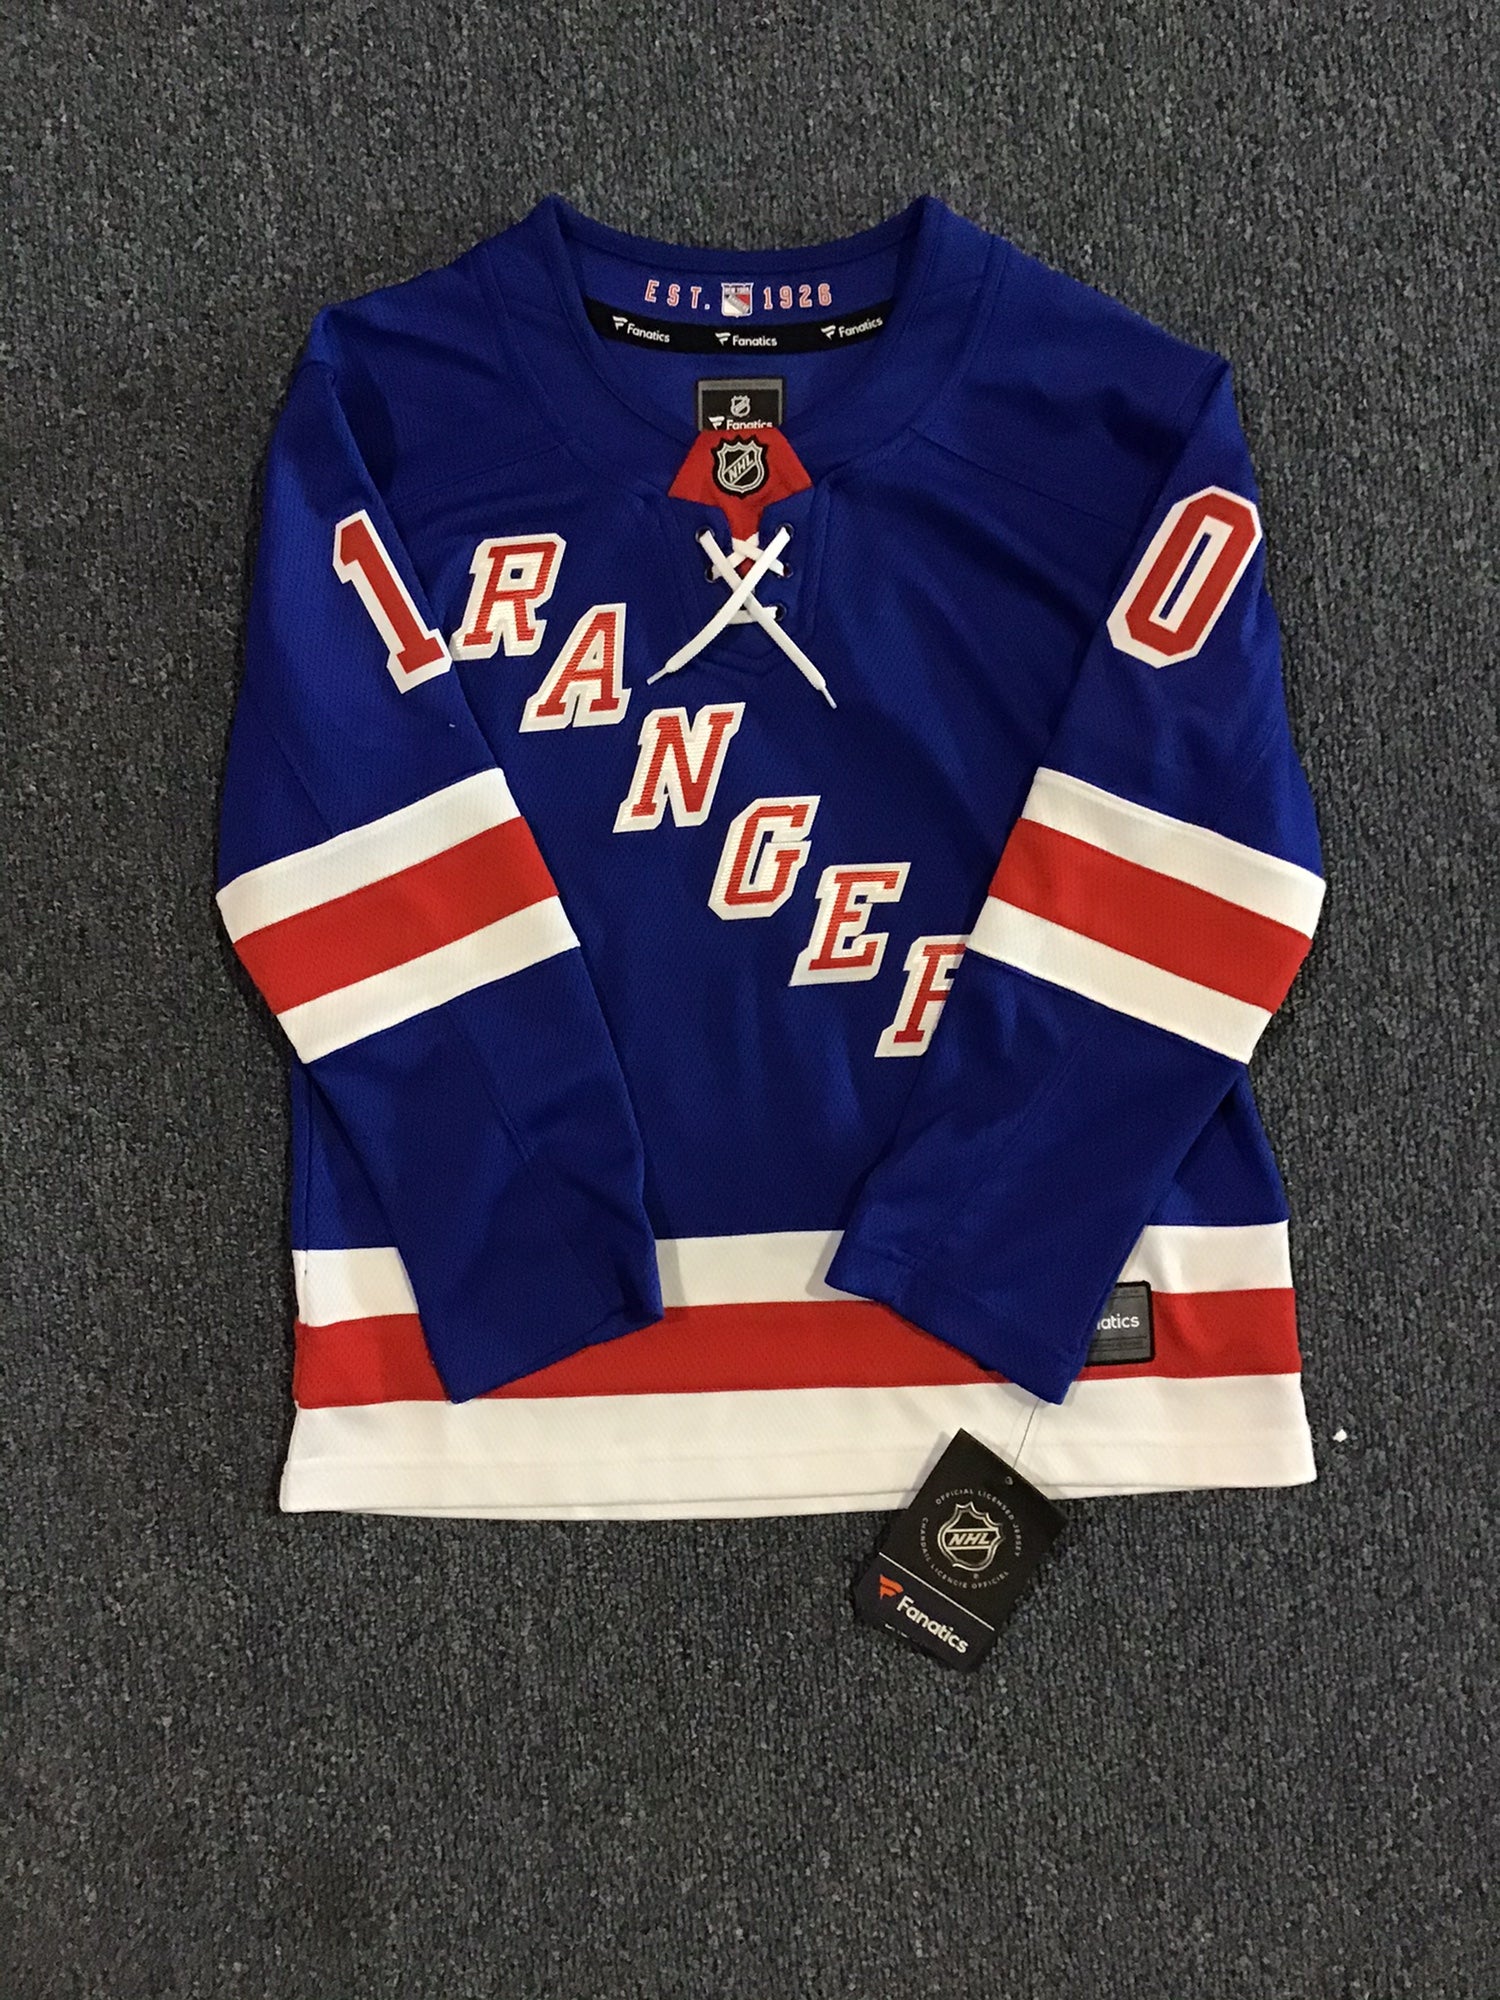 New With Tags New York Islanders Youth Fanatics Jersey Bailey #12  Small/Medium